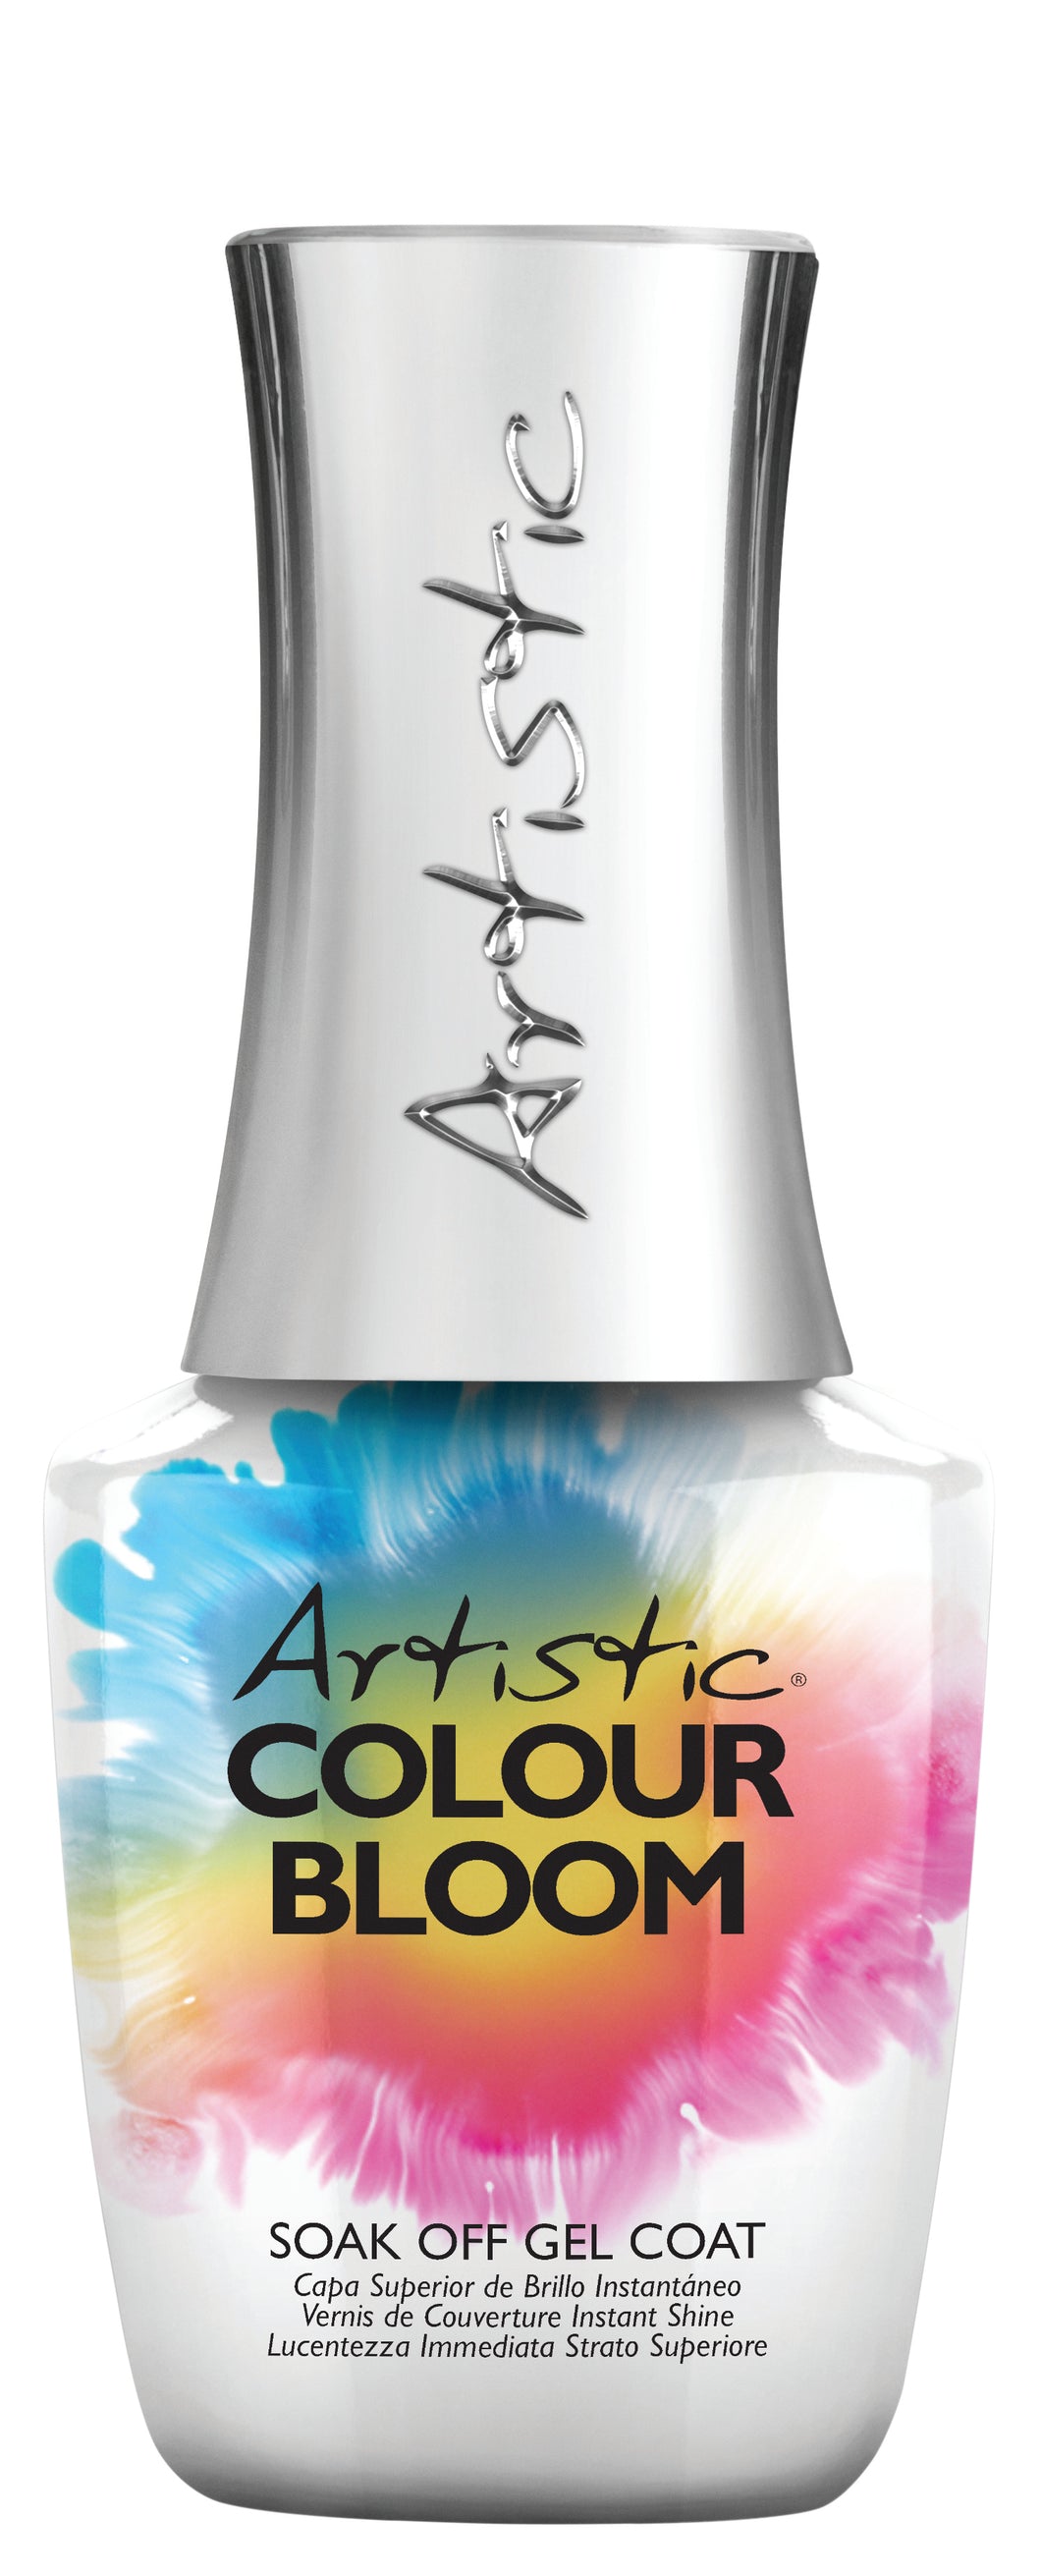 Artistic Colour Bloom - Professional Salon Brands